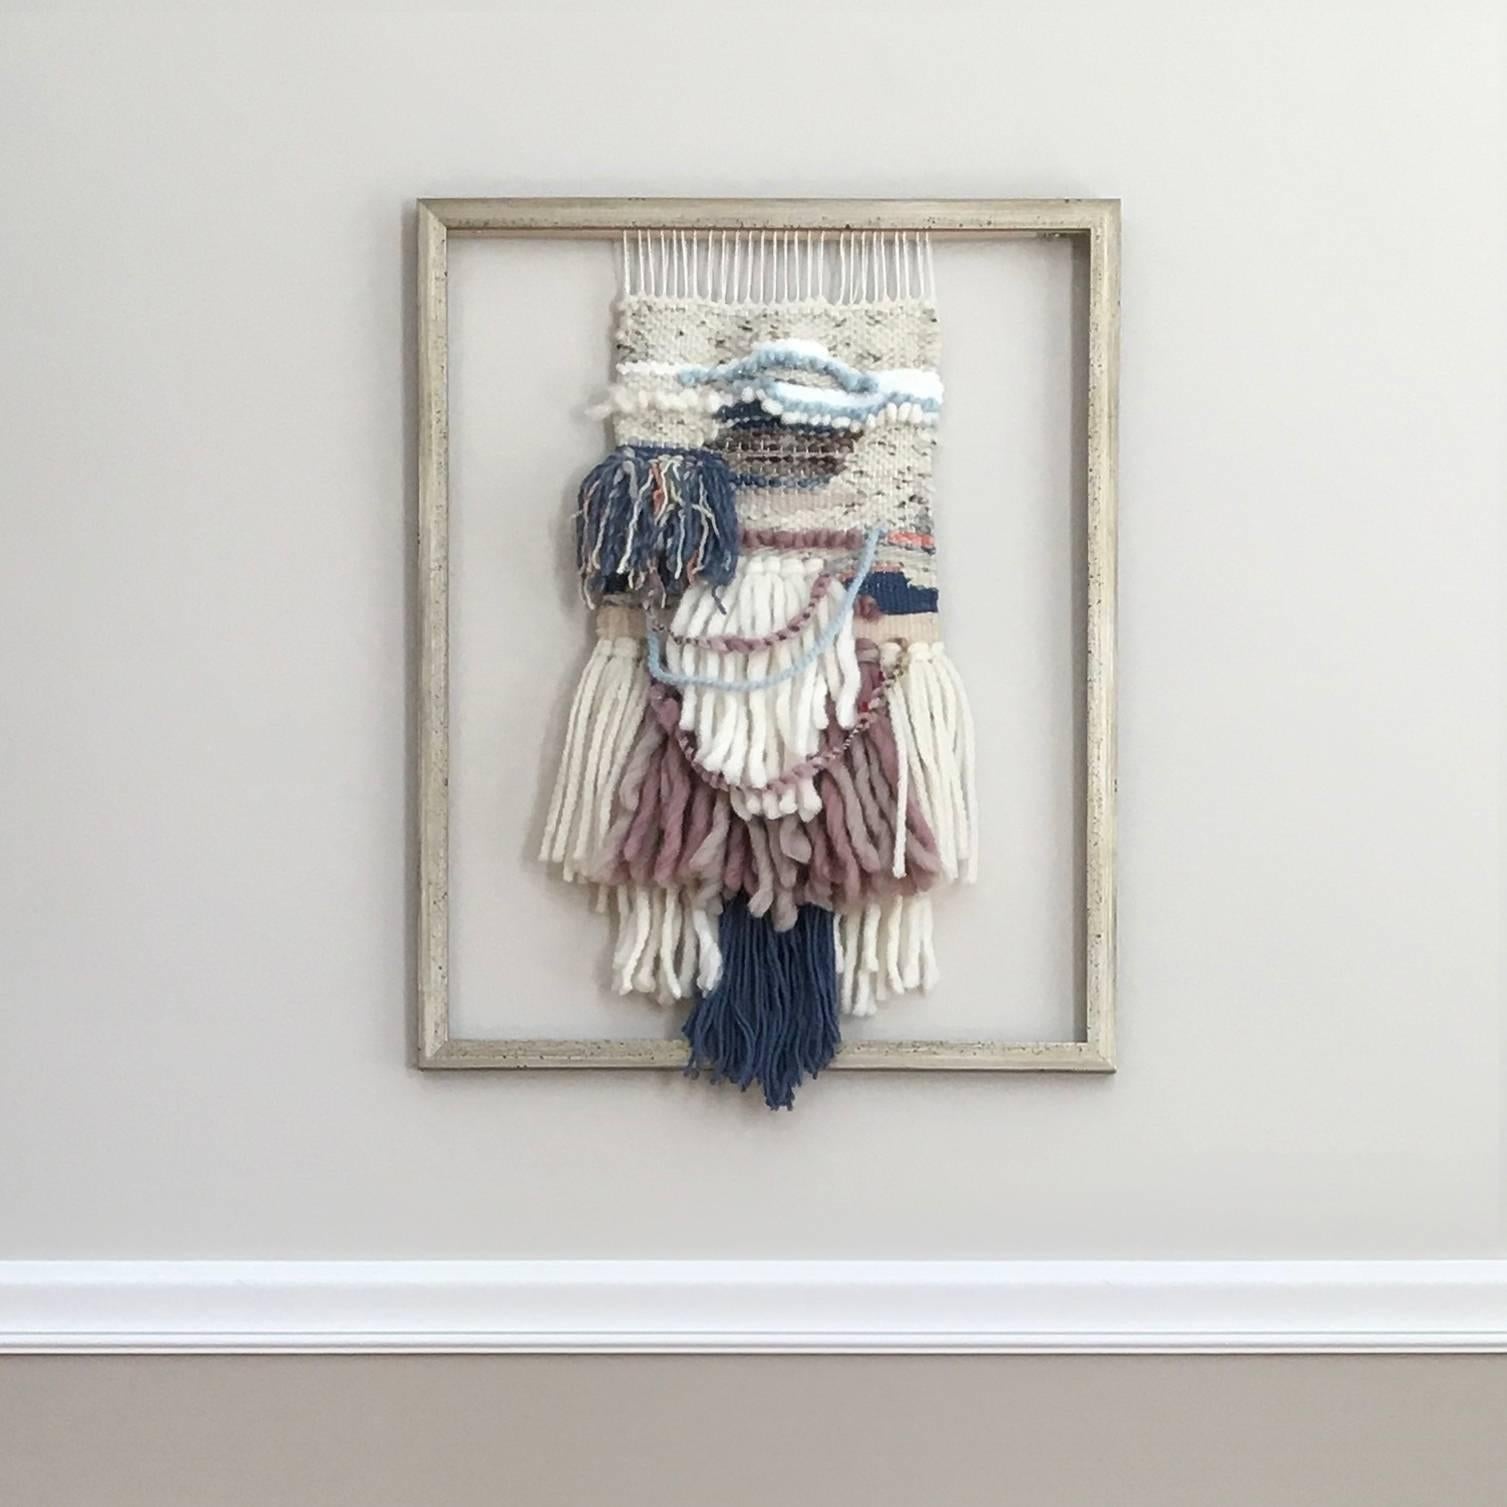 Tissage en fibre contemporain encadré « The Weaver's Tale » - Mixed Media Art de Dolores Tema